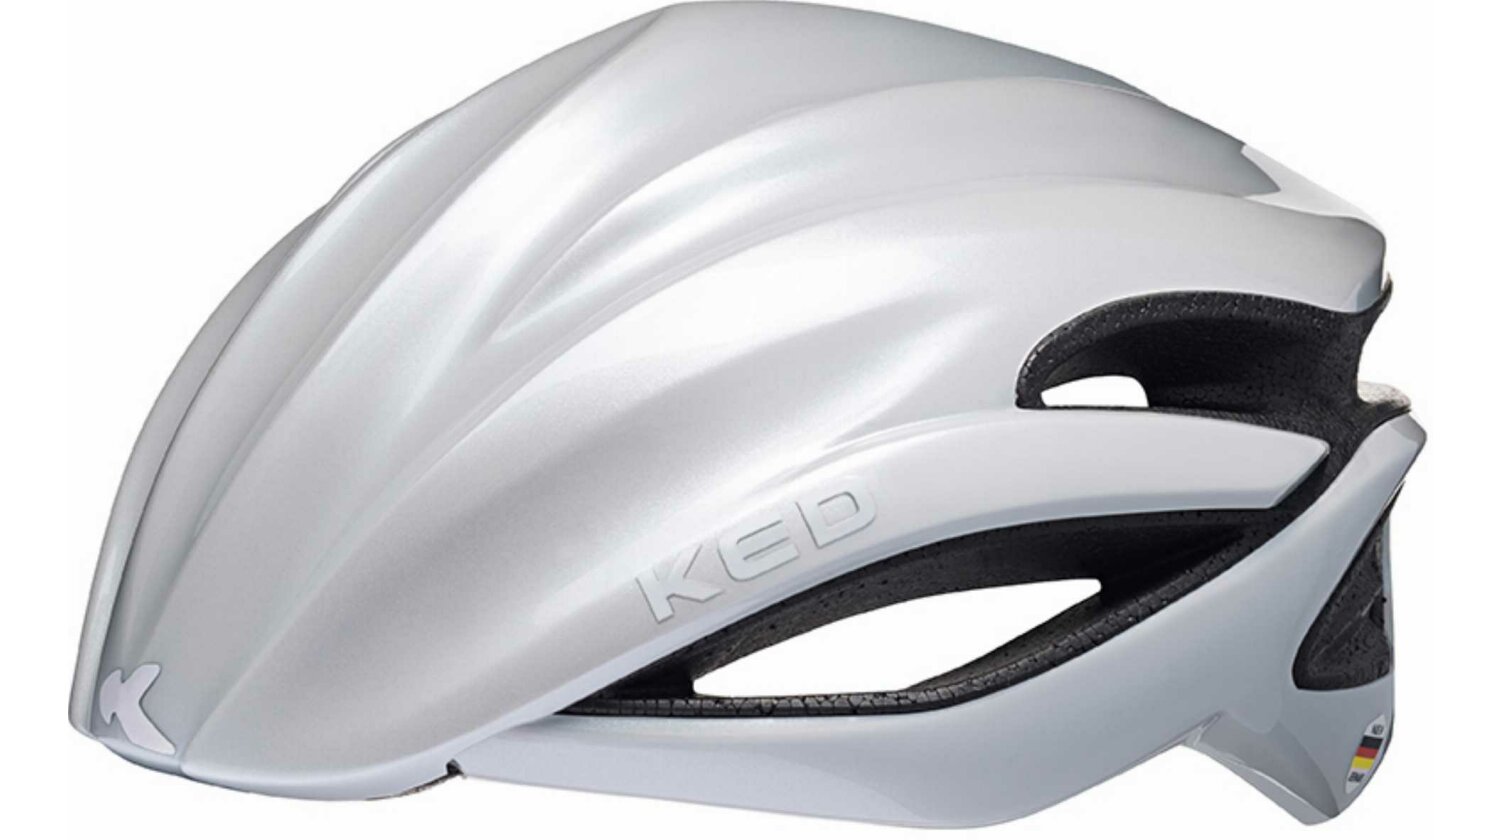 KED Rayzon Race Rennrad-Helm white L/57-61 cm